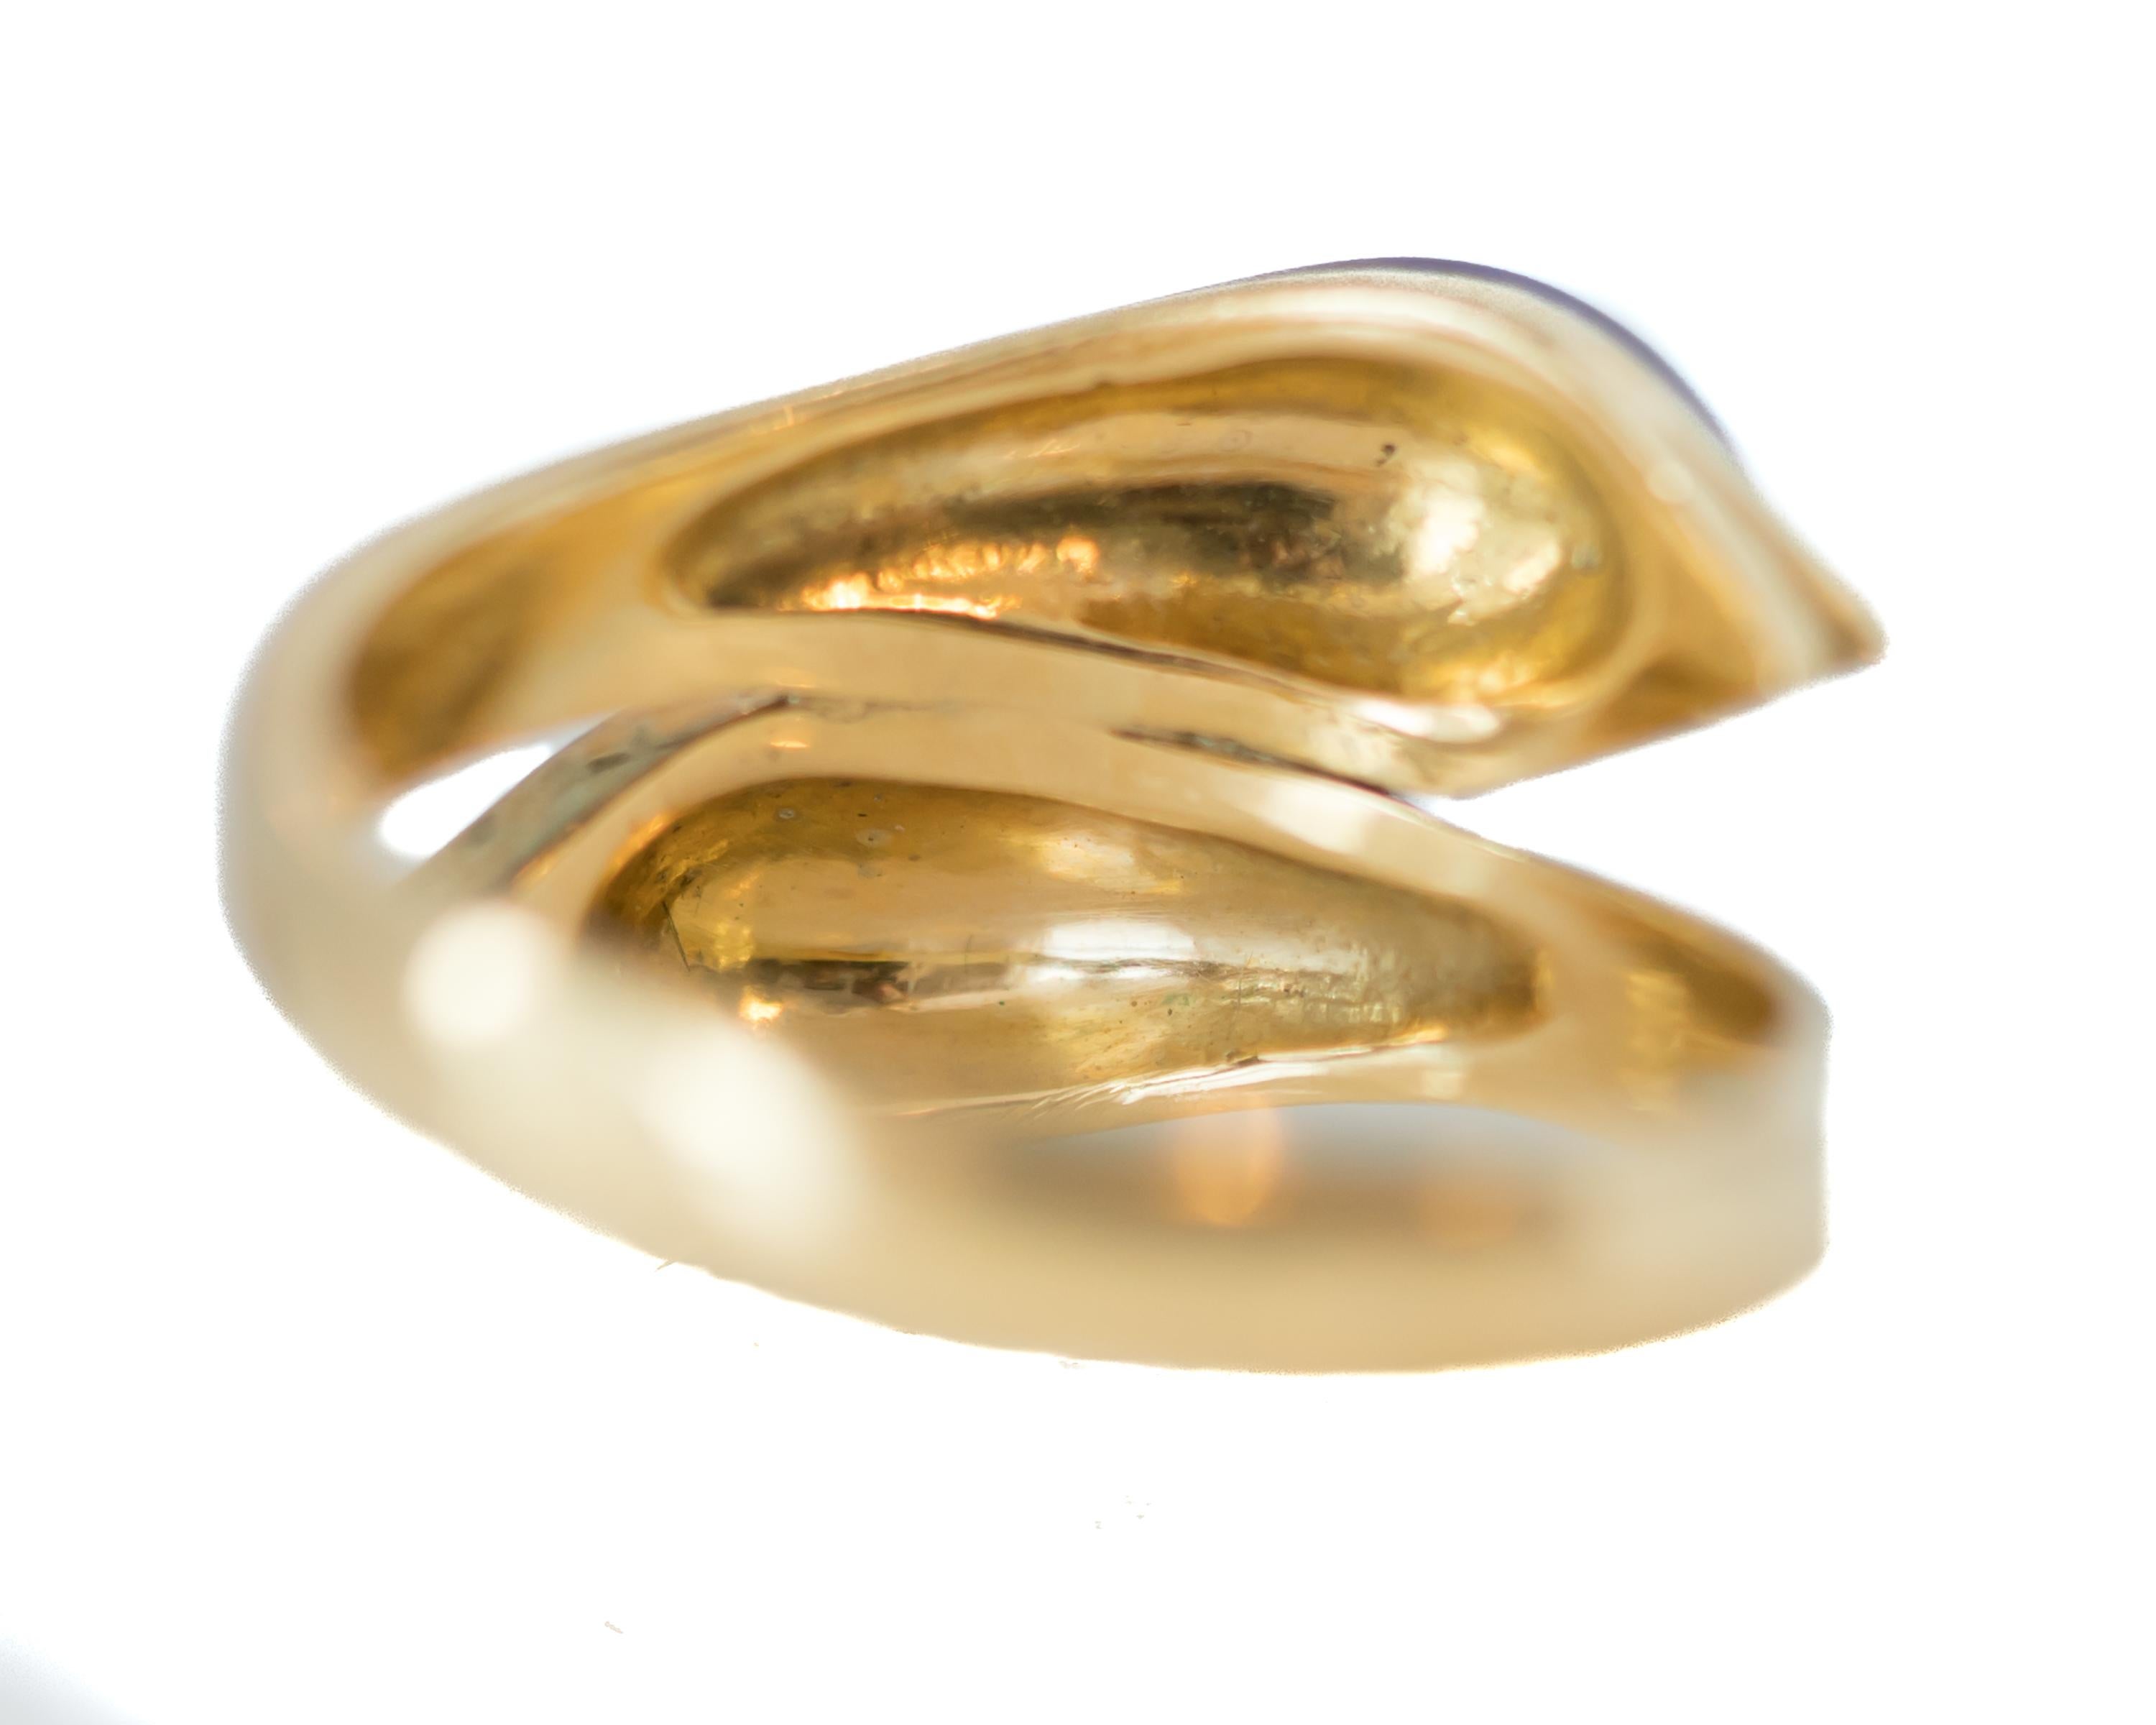 Retro Serpent Gold Ring Featuring 18 Karat Yellow Gold and Enamel